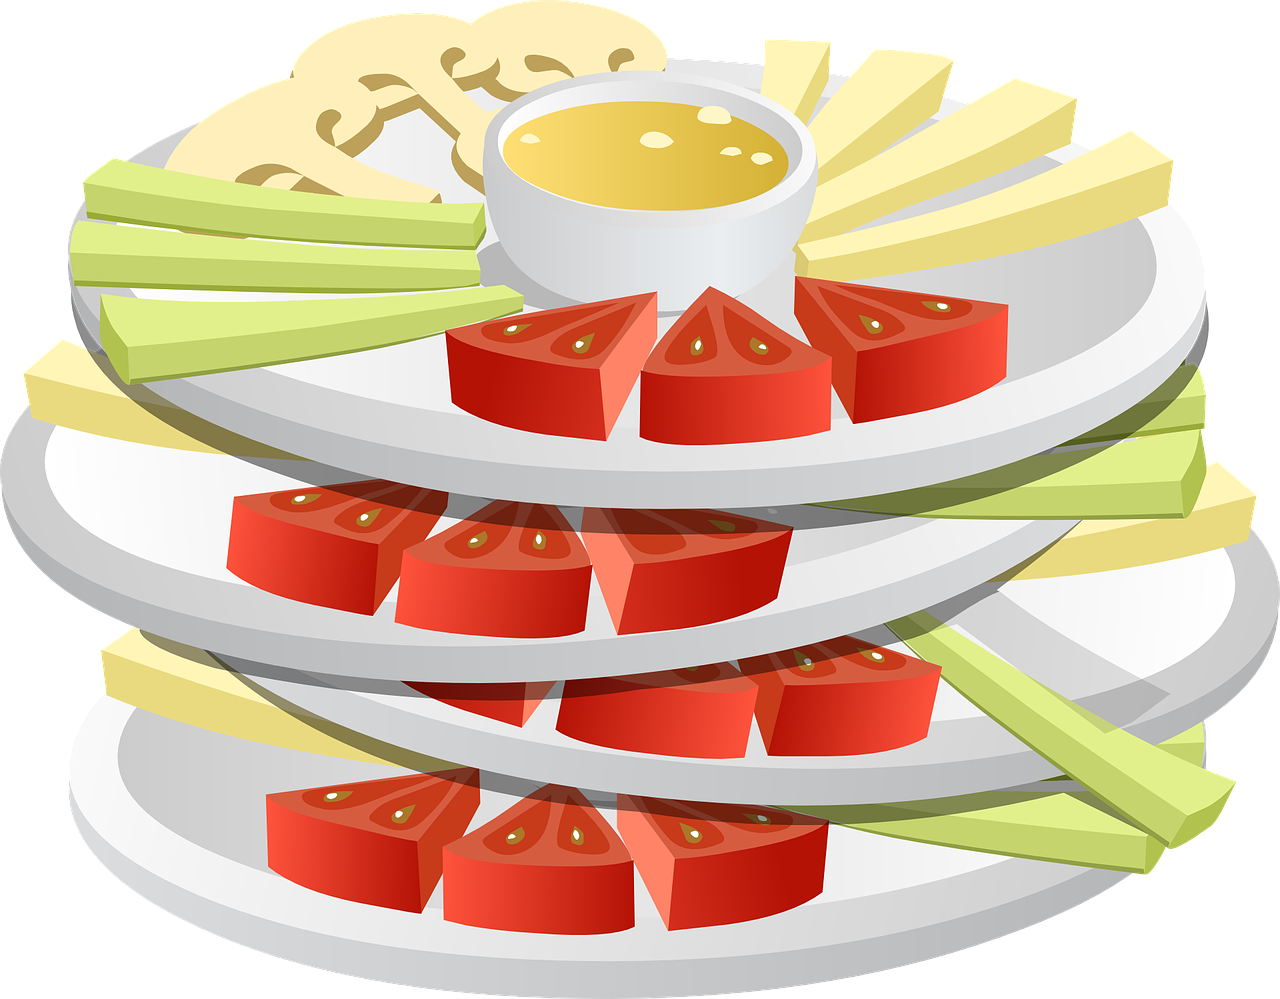 Healthy Snack Platter Illustration